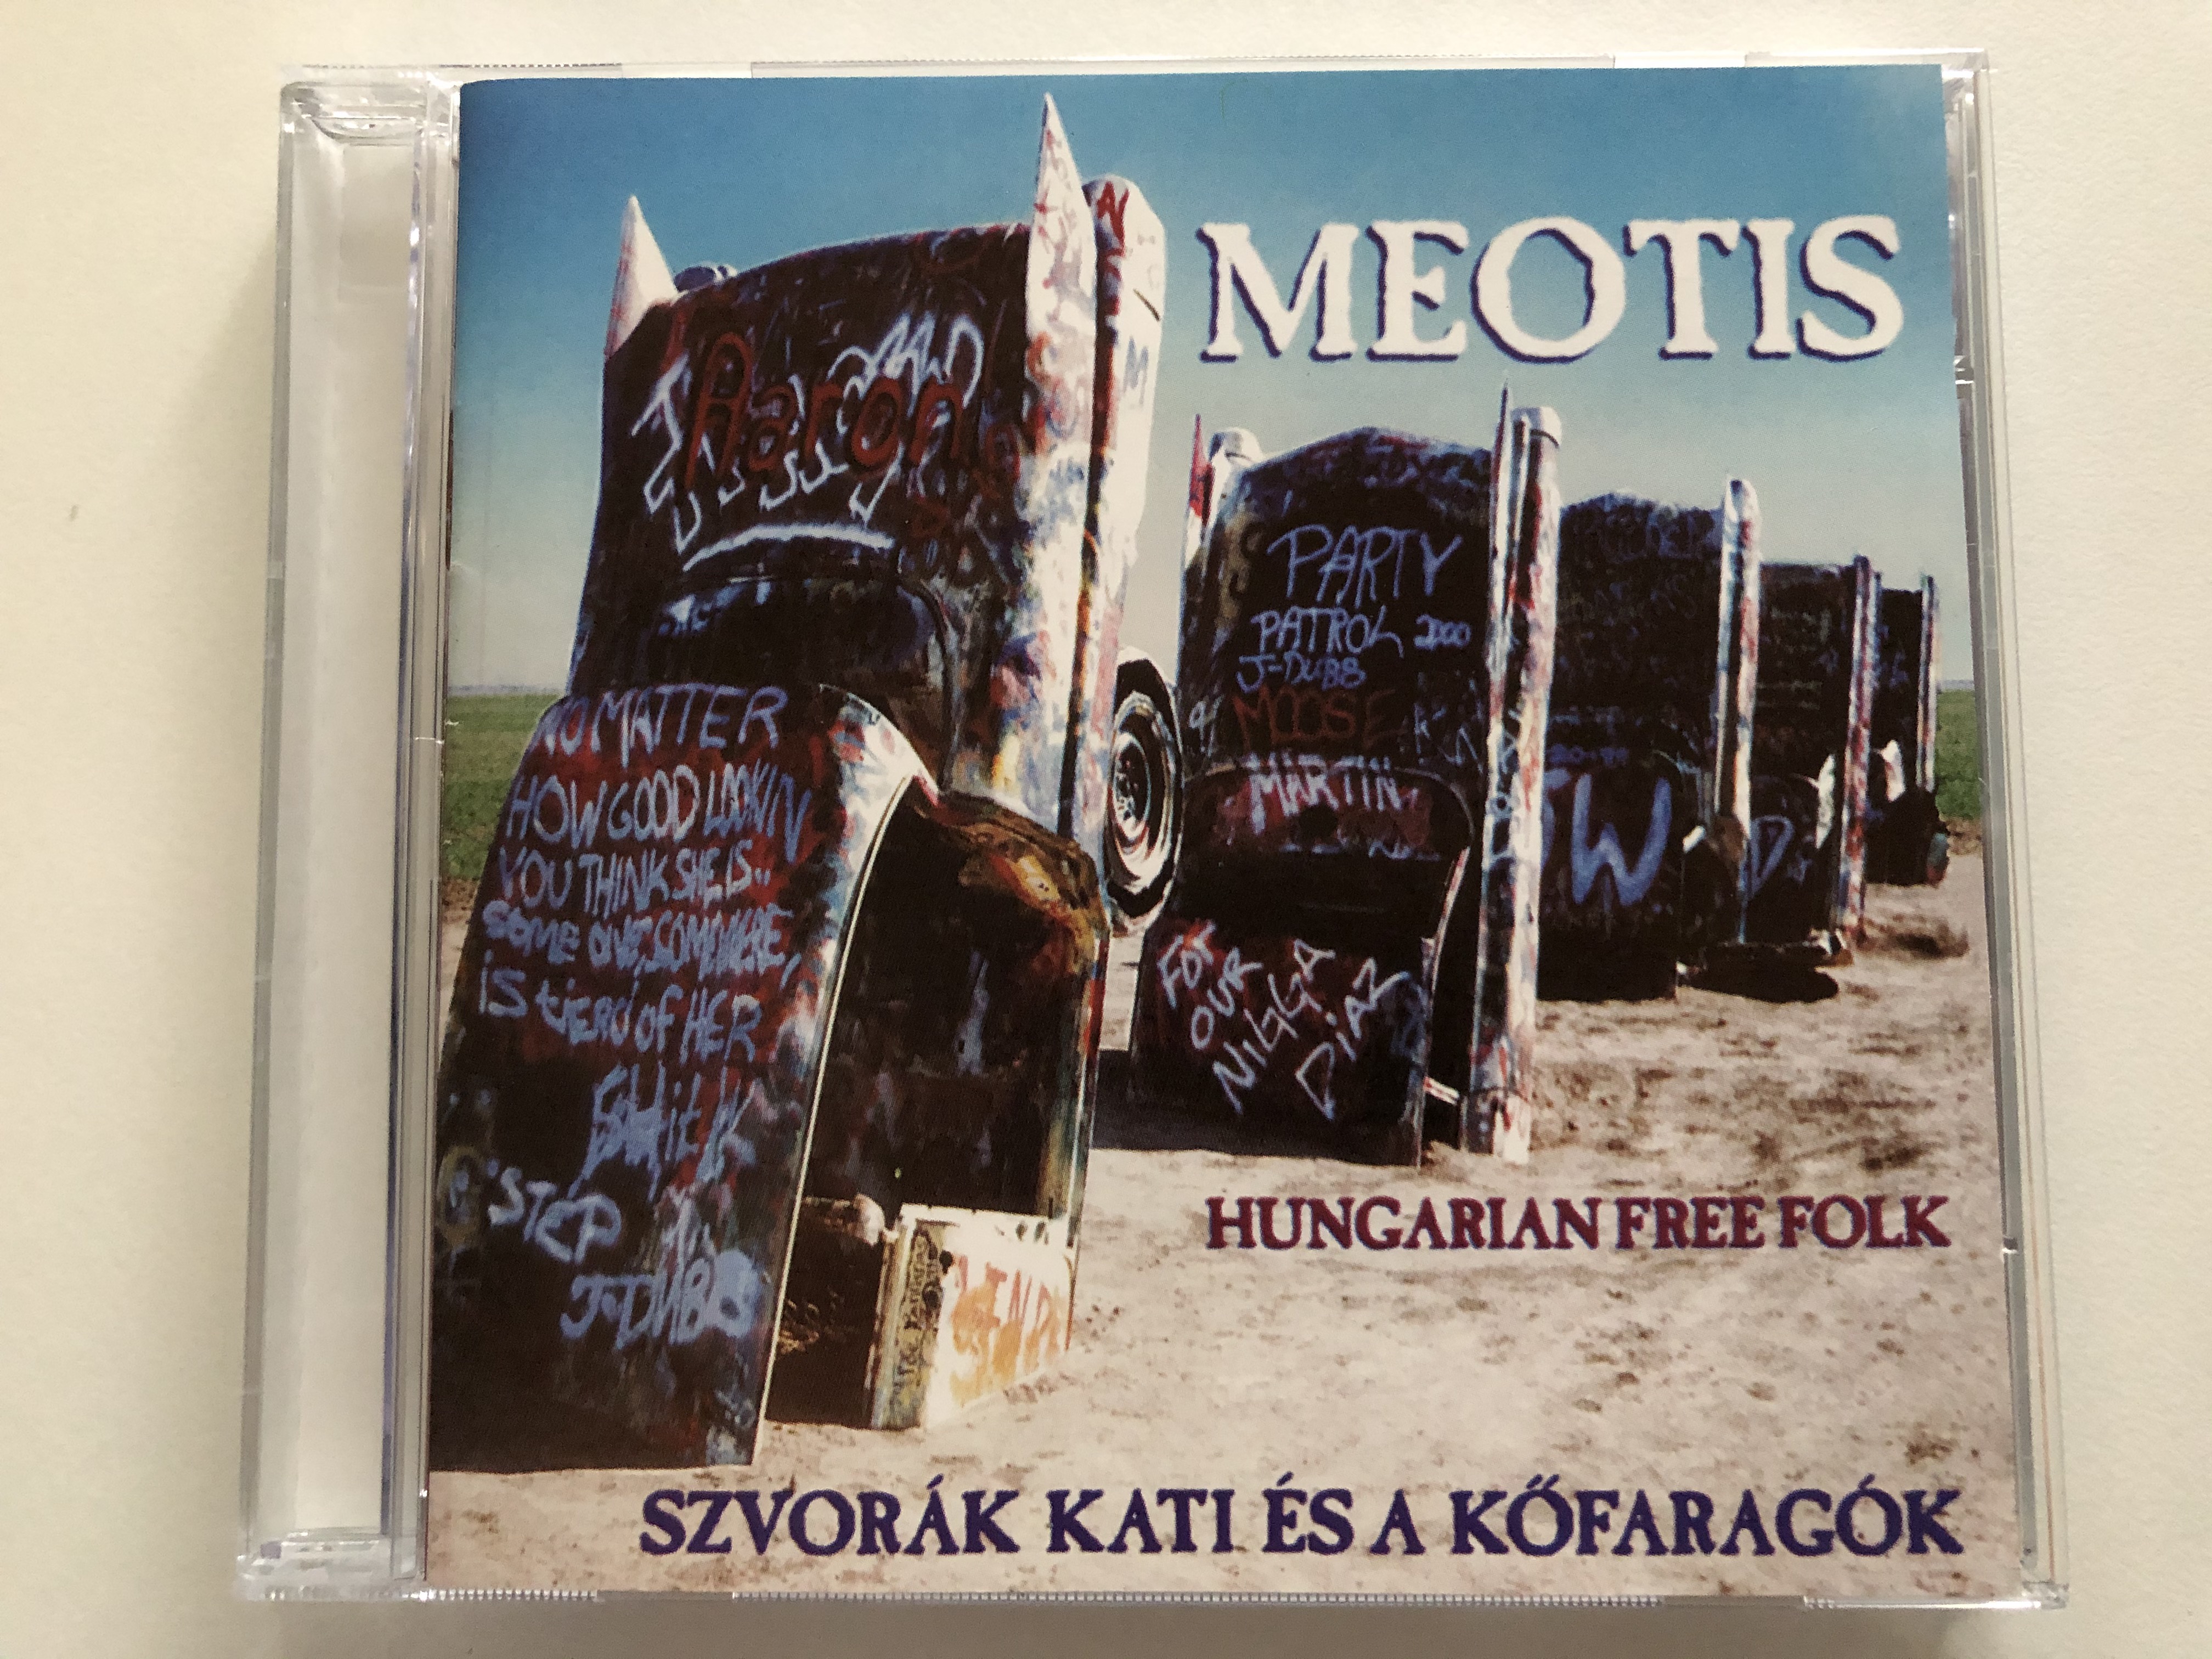 meotis-hungarian-free-folk-szvor-k-kati-s-a-k-farag-k-etnofon-audio-cd-2000-reper-cd-032-1-.jpg